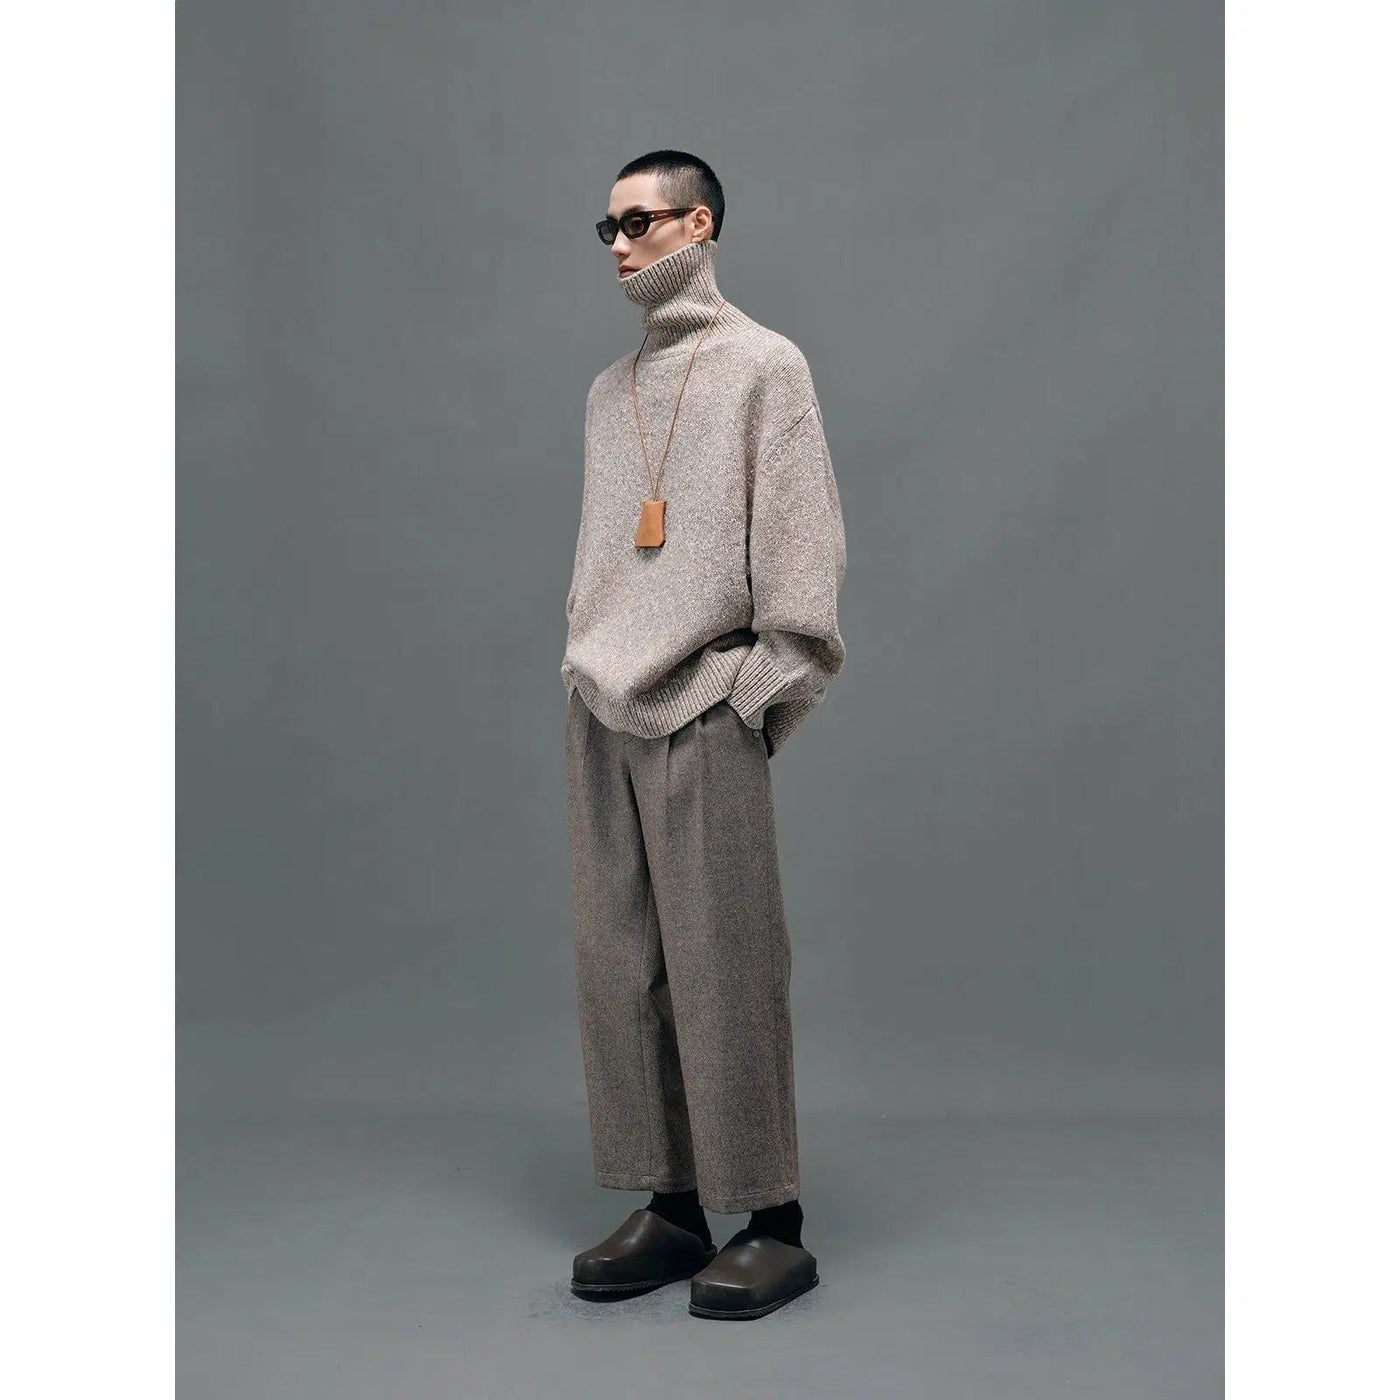 Relaxed Fit Knit Turtleneck Korean Street Fashion Turtleneck By NANS Shop Online at OH Vault